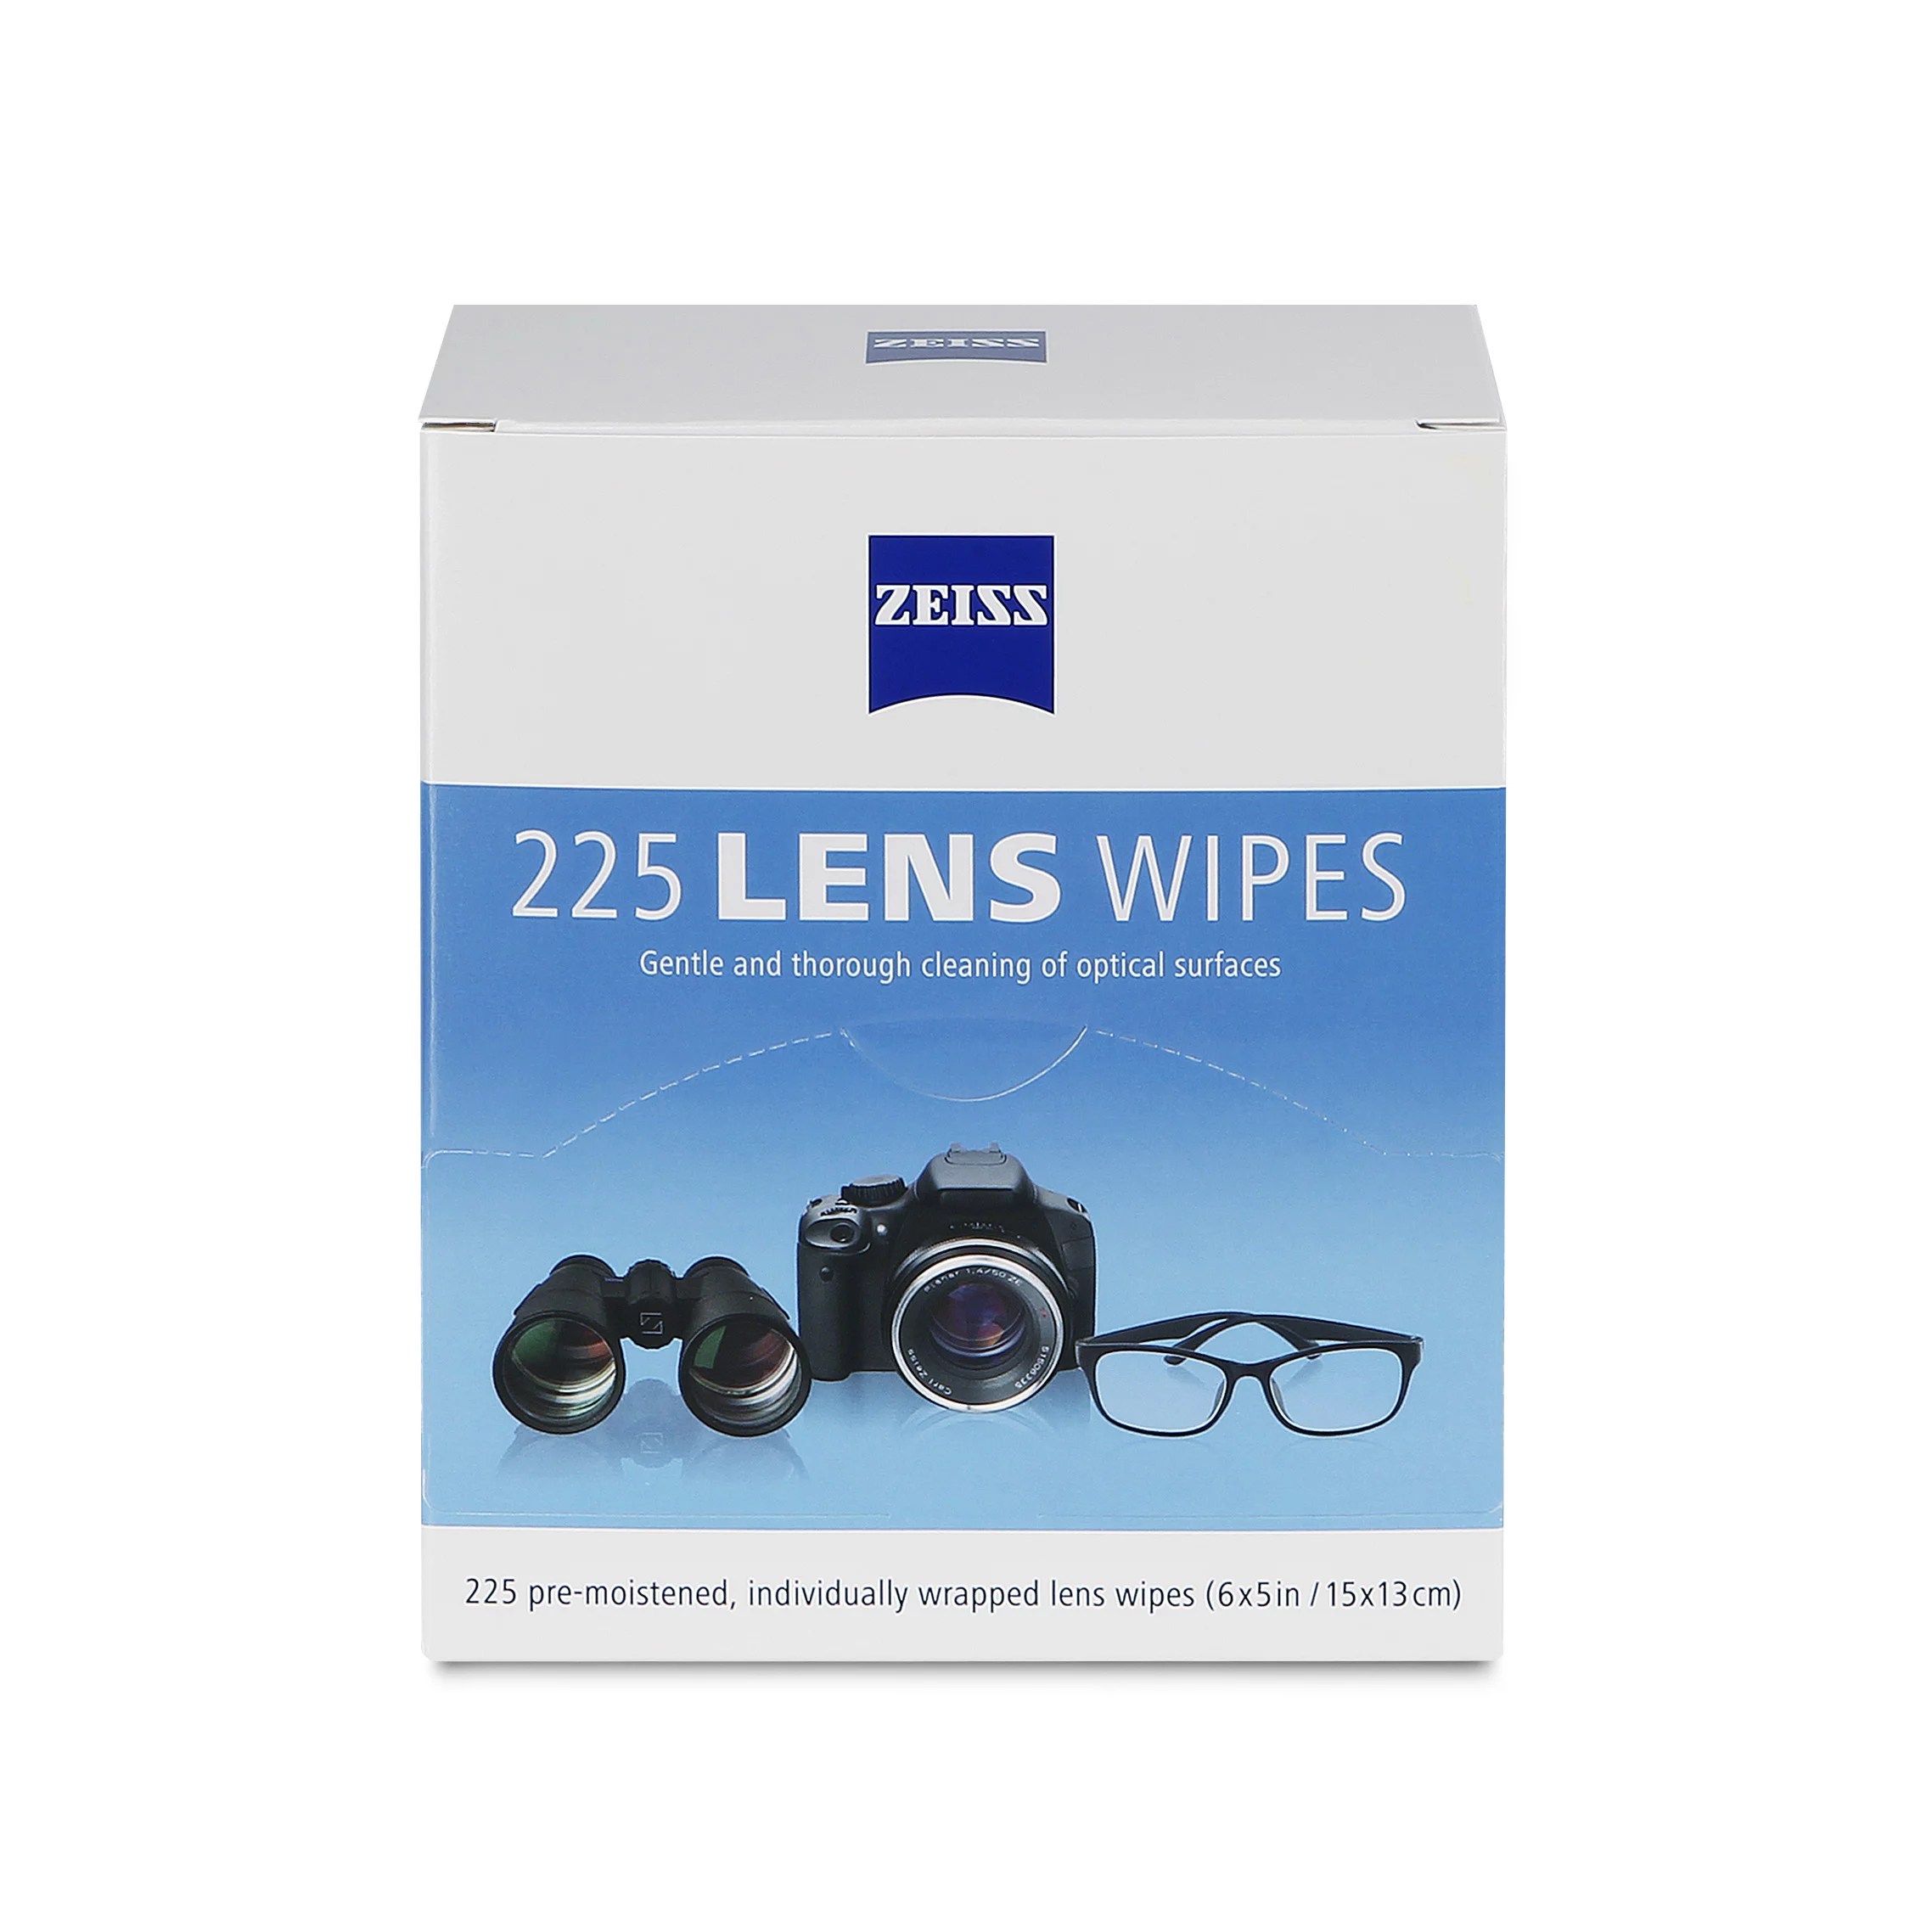 ZEISS Lens Wipes 225 PreMoistened Eyeglass Cleaning